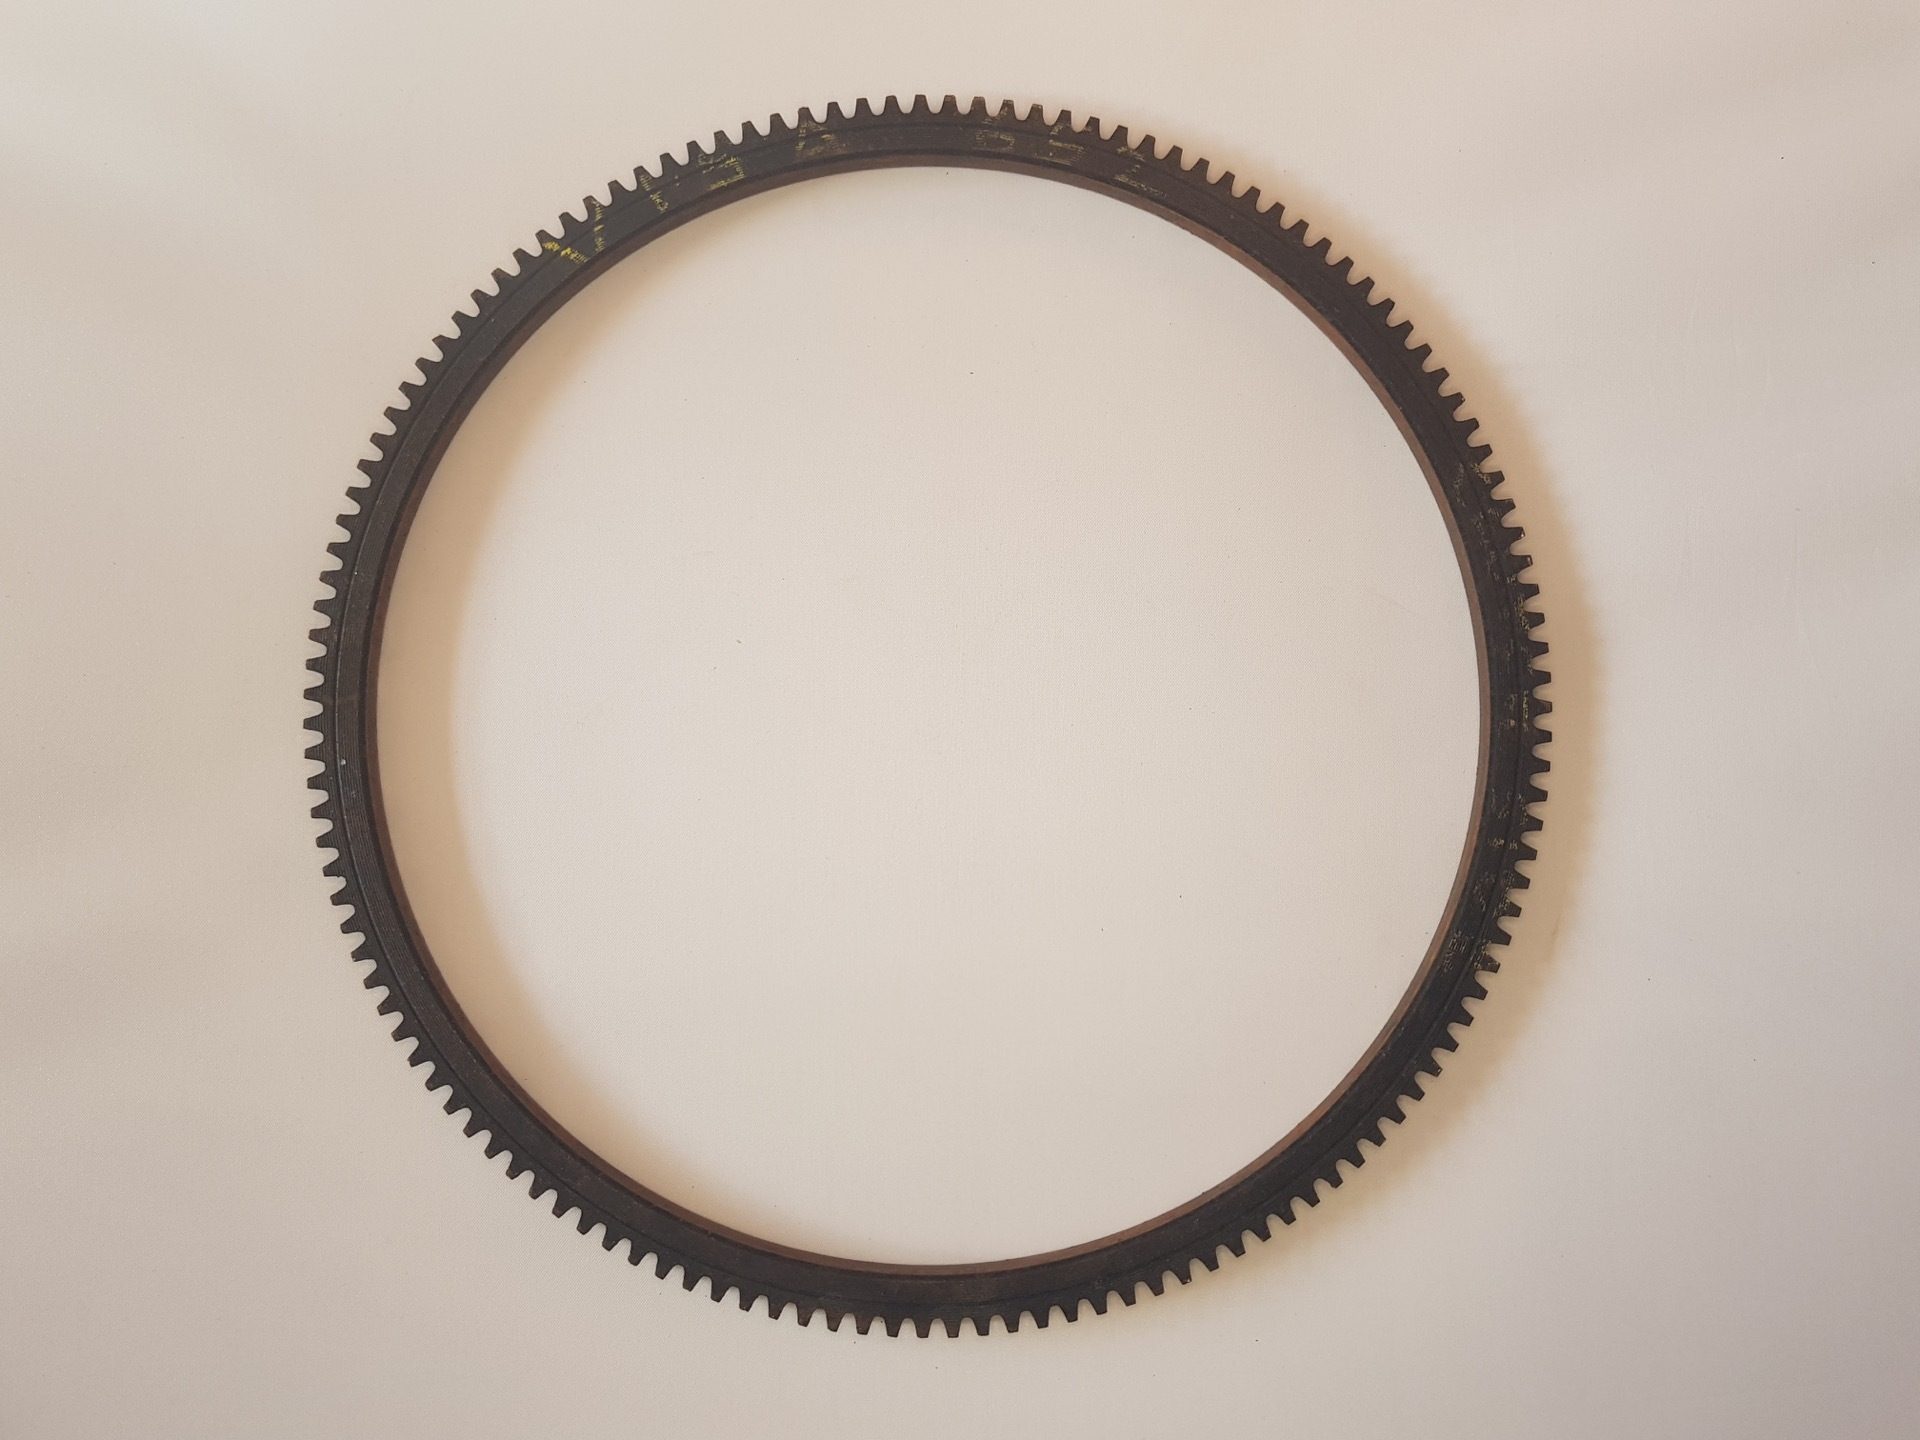 Amazon.com: Flywheel Ring Gear Replacement - Replaces 392134, 399676,  696537 : Patio, Lawn & Garden